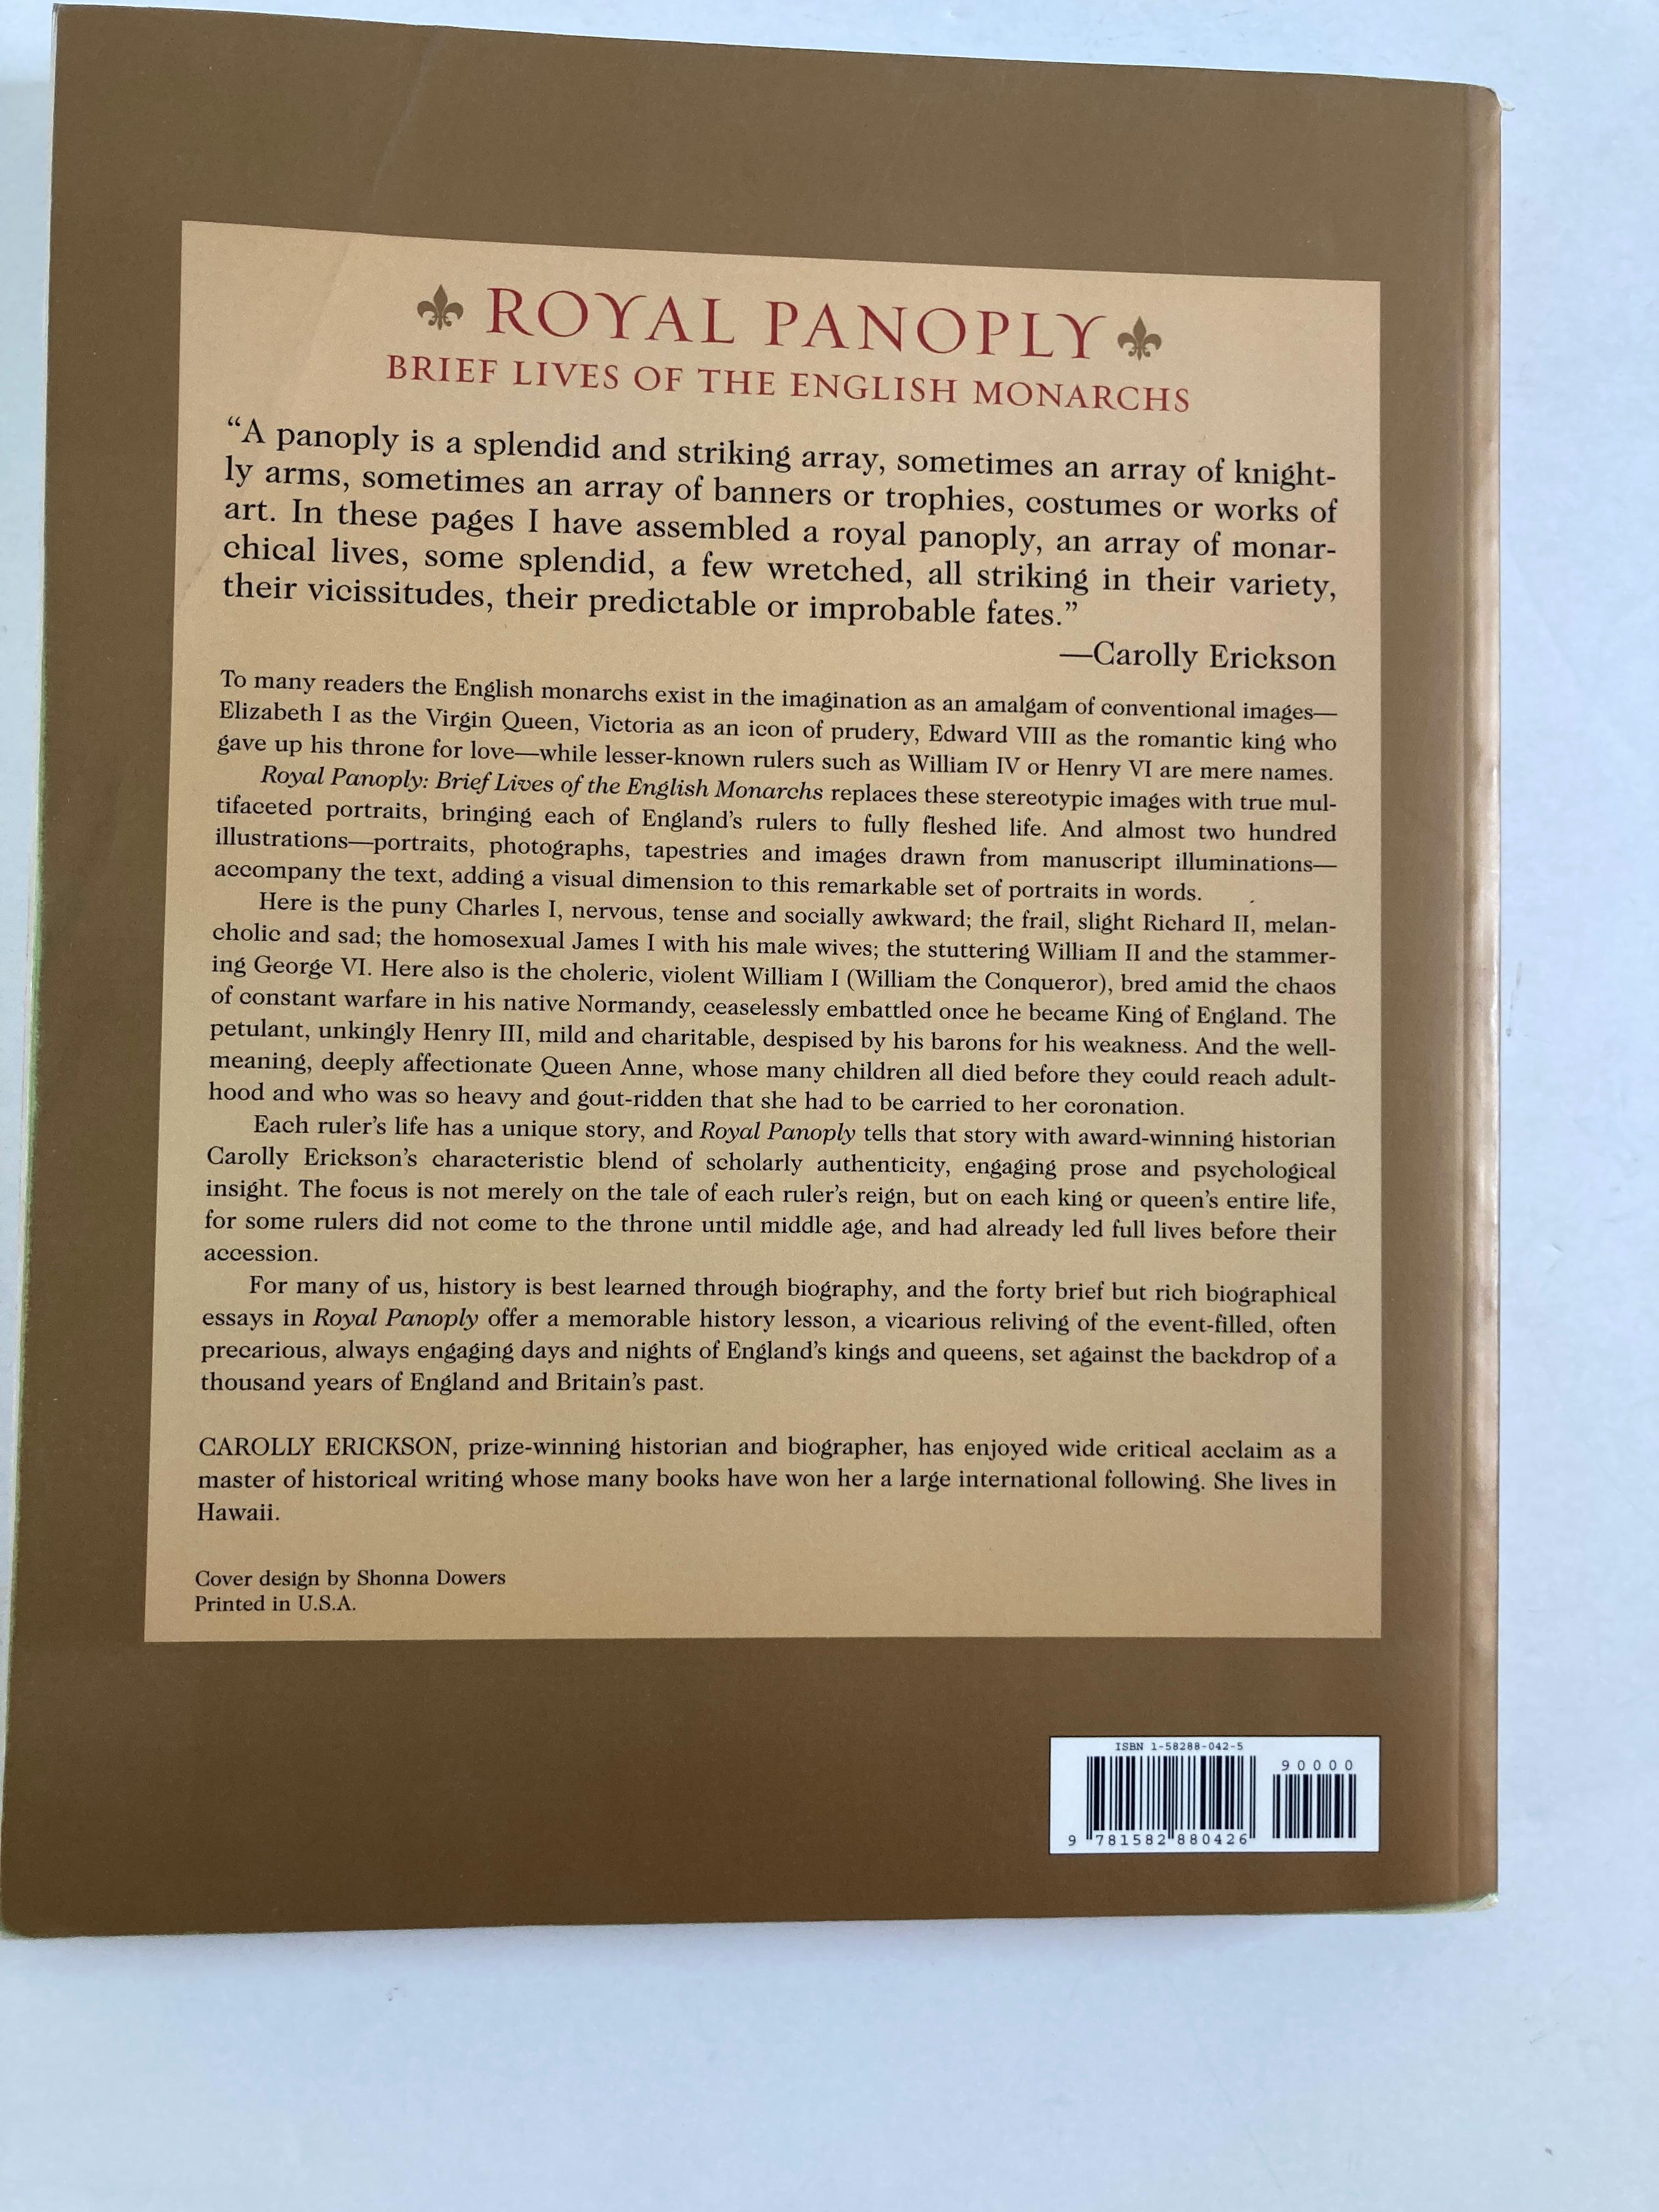 Royal Panoply Brief Lives of the English Monarchs von Carolly Erickson, Buch (Georgian) im Angebot